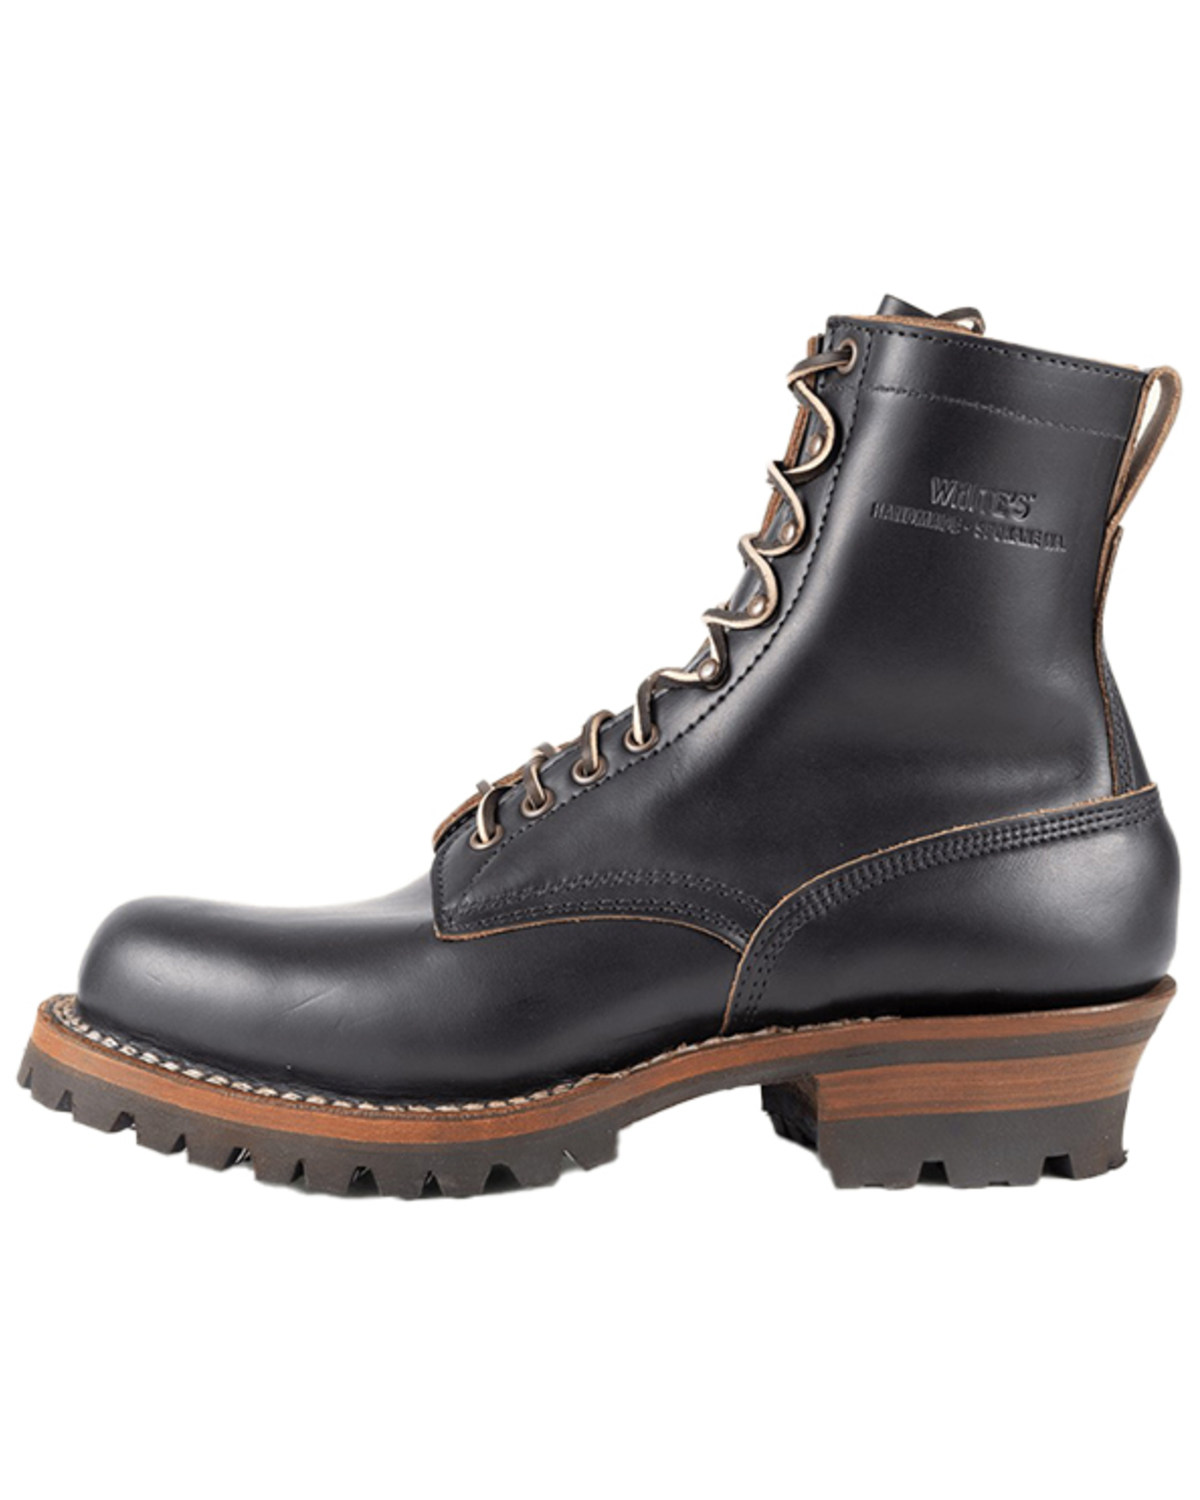 White's Boots Men's C355 Logger Work - Soft Toe